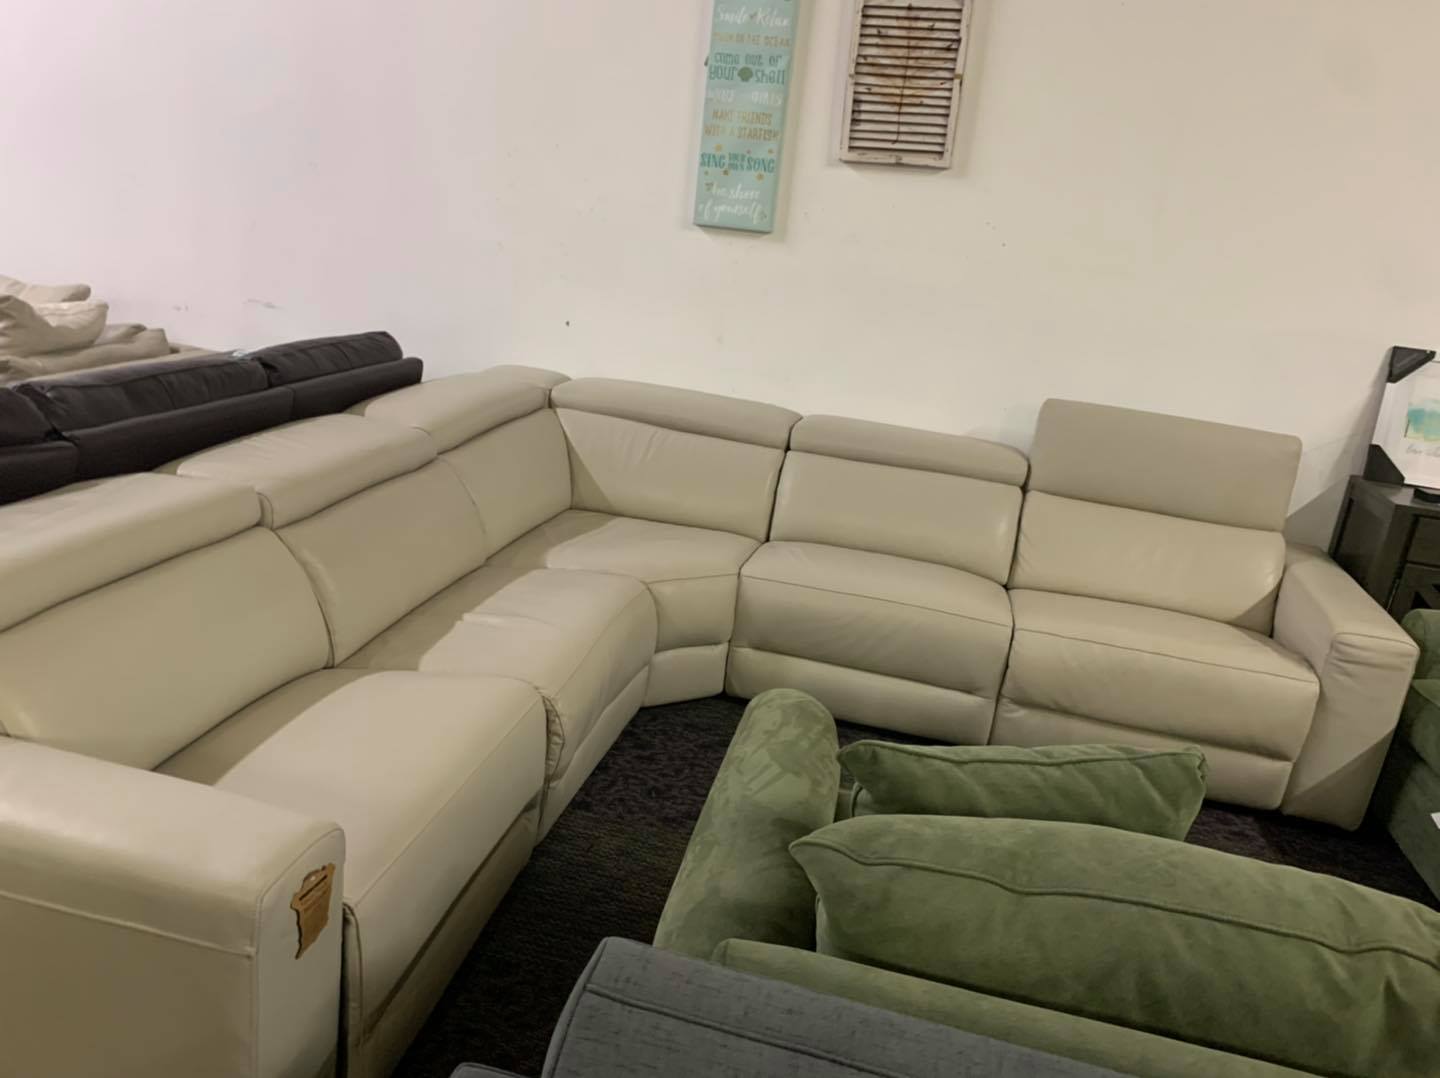 macys nevio 3-pc leather sectional sofa